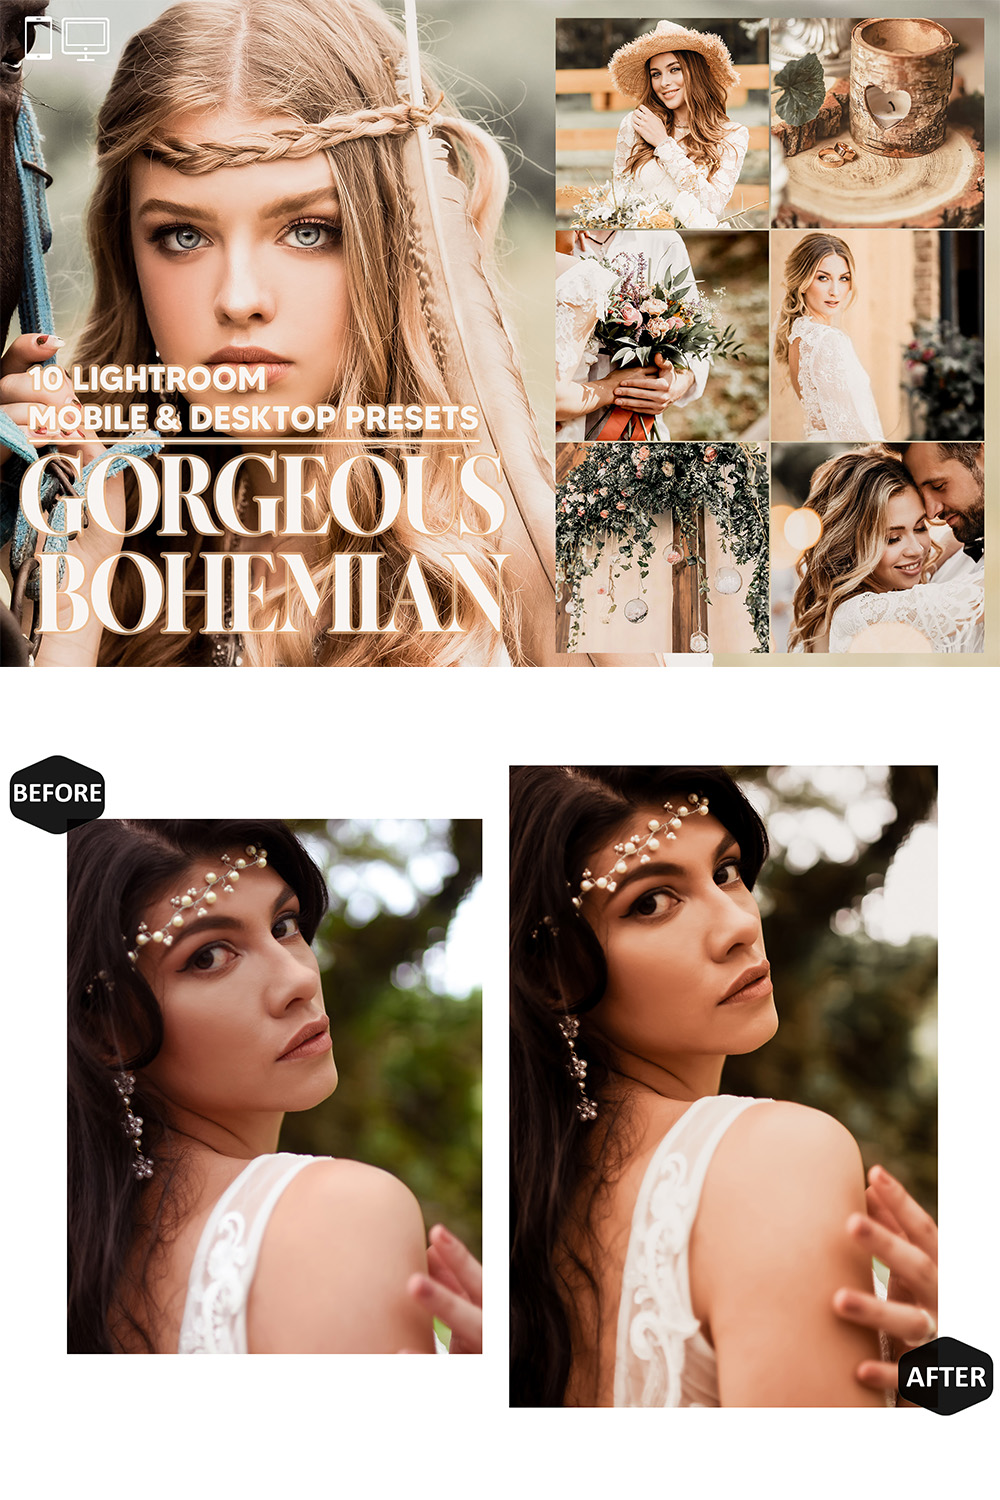 10 Gorgeous Bohemian Lightroom Presets, Bright Wedding Mobile Preset, Warm Boho Desktop LR Filter DNG Lifestyle Theme For Blogger Portrait Instagram pinterest preview image.